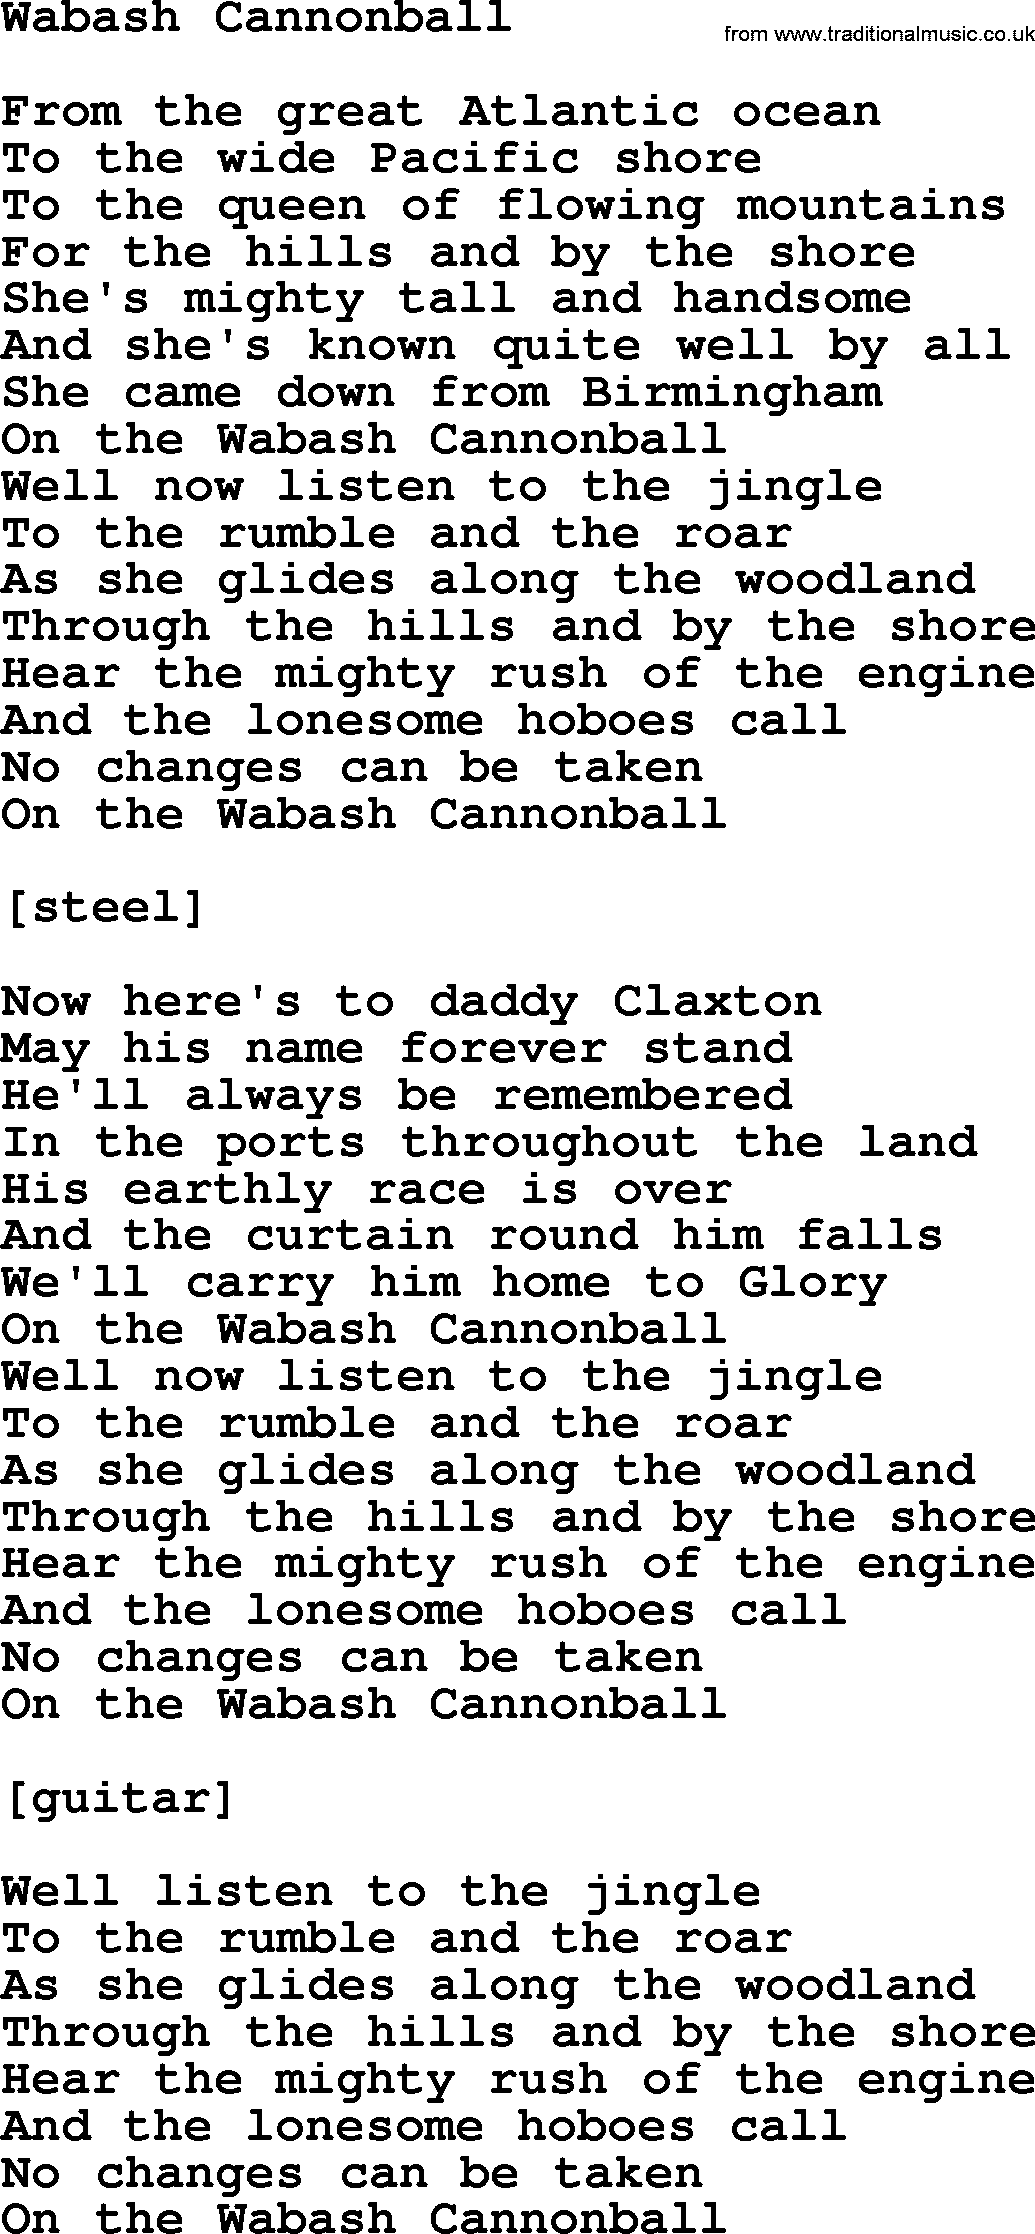 Willie Nelson song: Wabash Cannonball lyrics